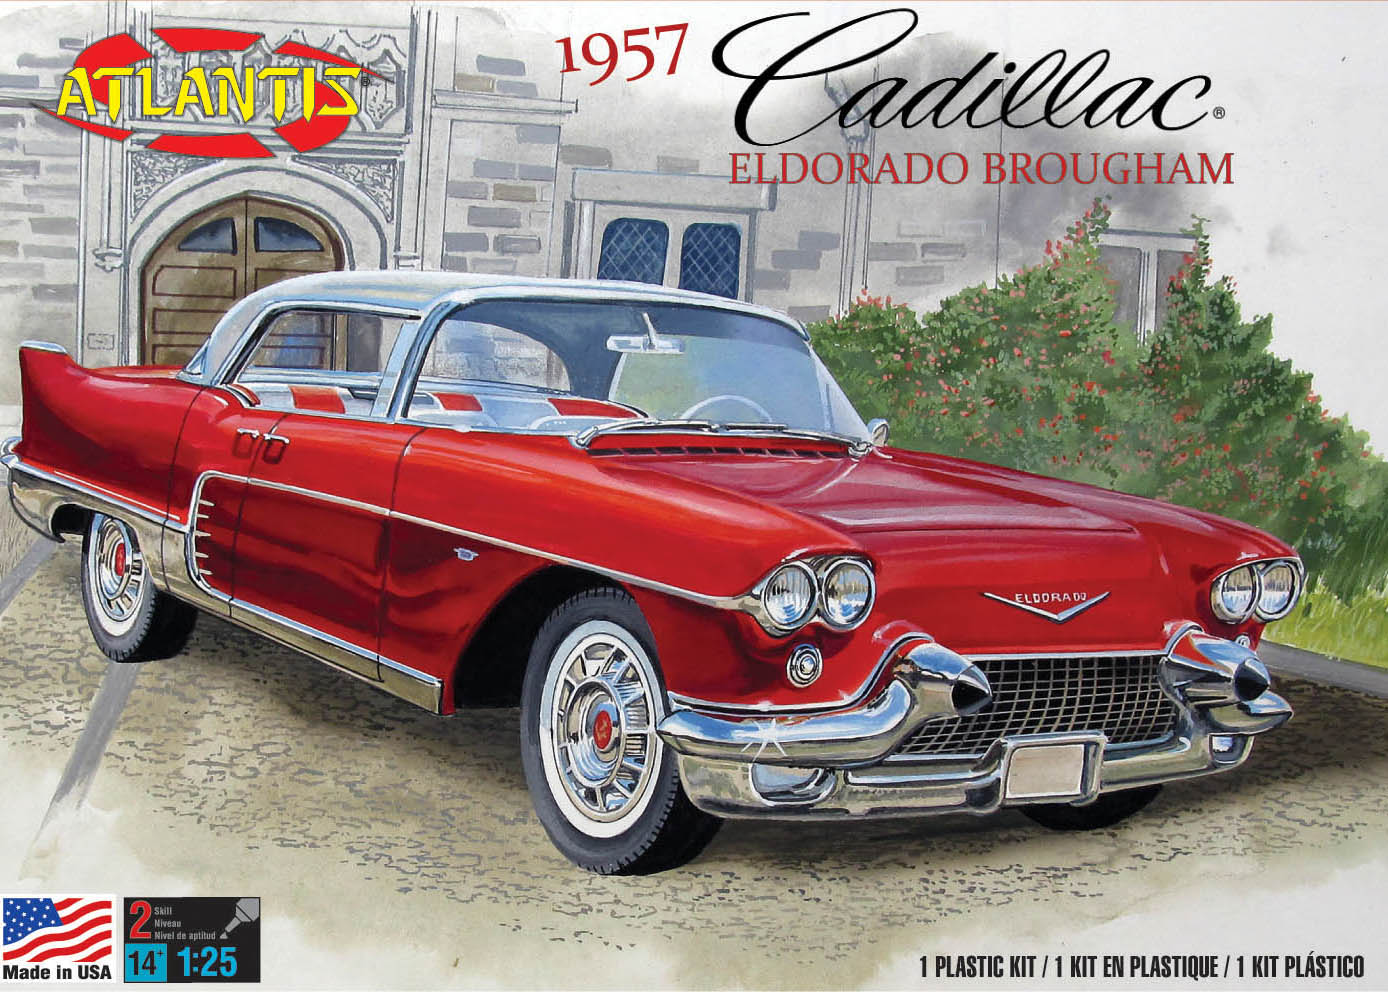 Atlantis 1957 Cadillac Eldorado Brougham 1:25 Scale Model Kit